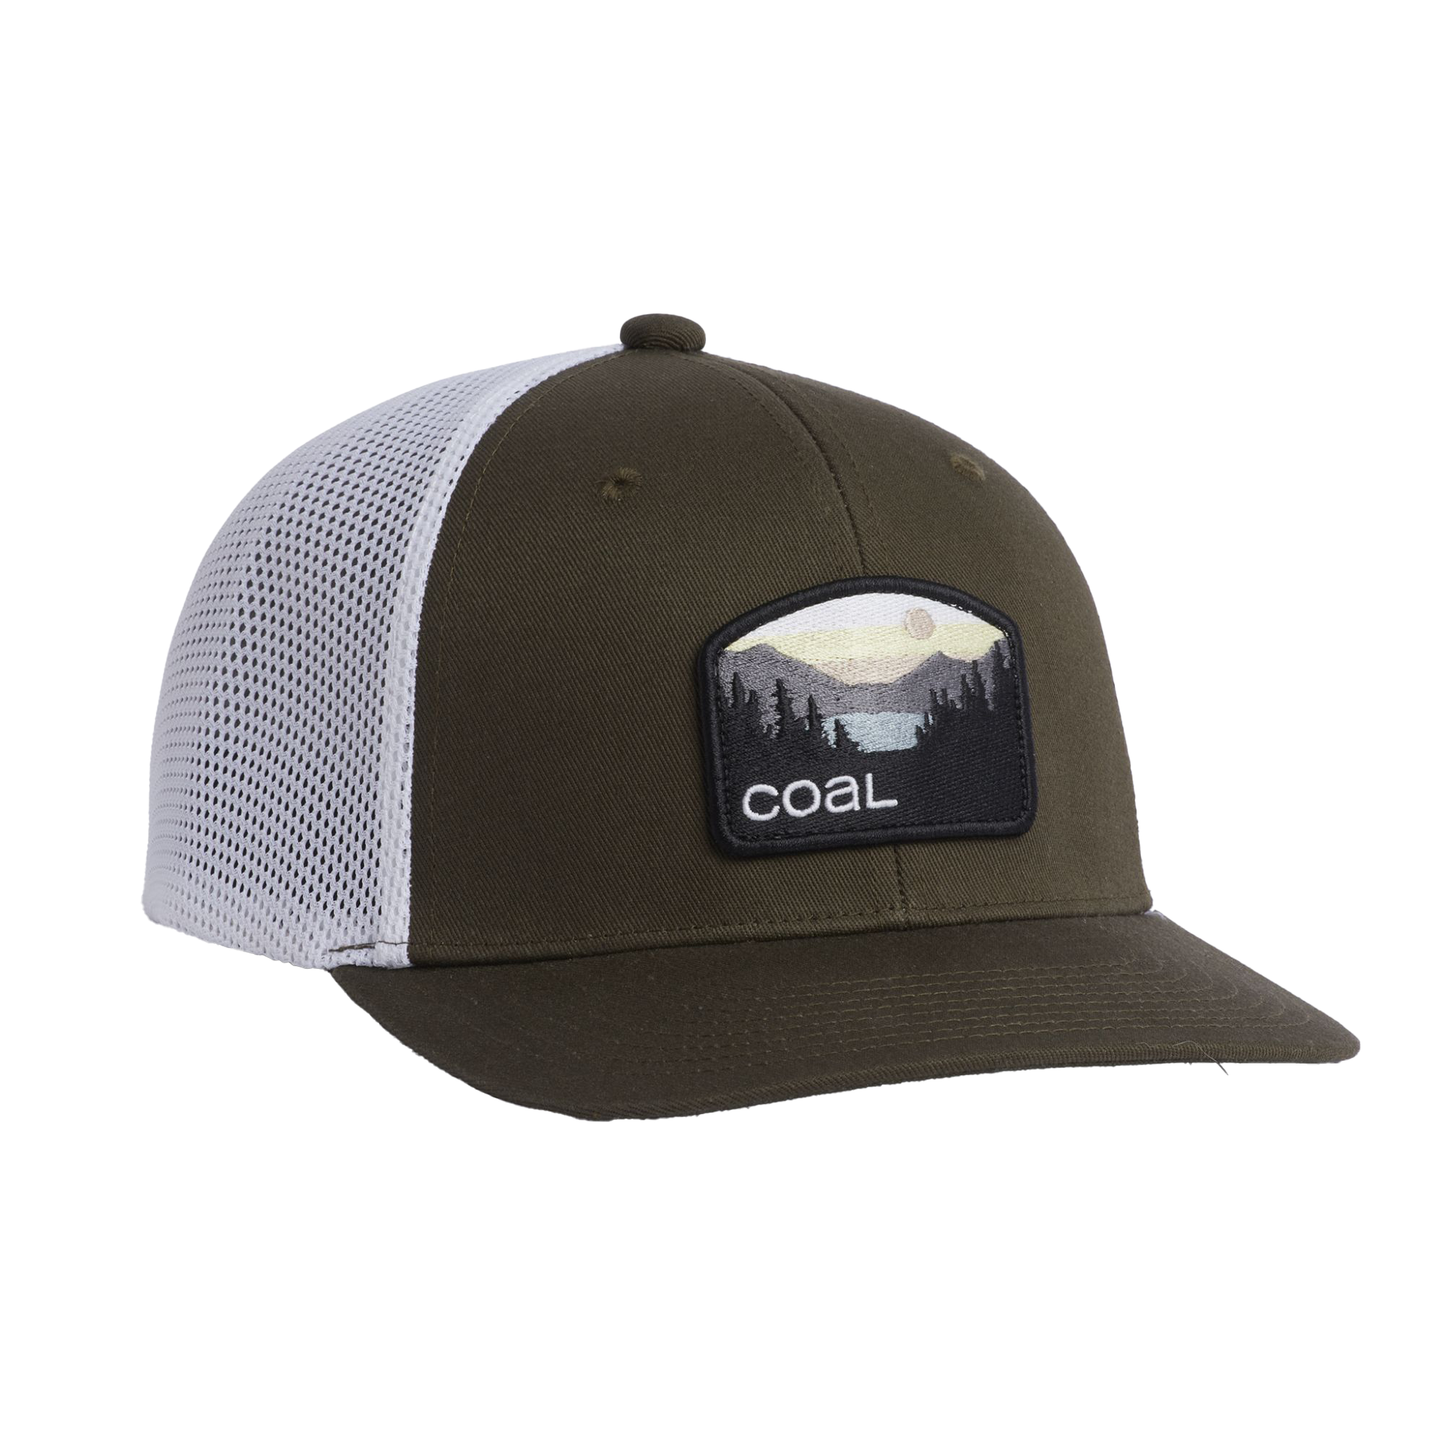 Coal Hauler One Low Hat Olive OS Hats